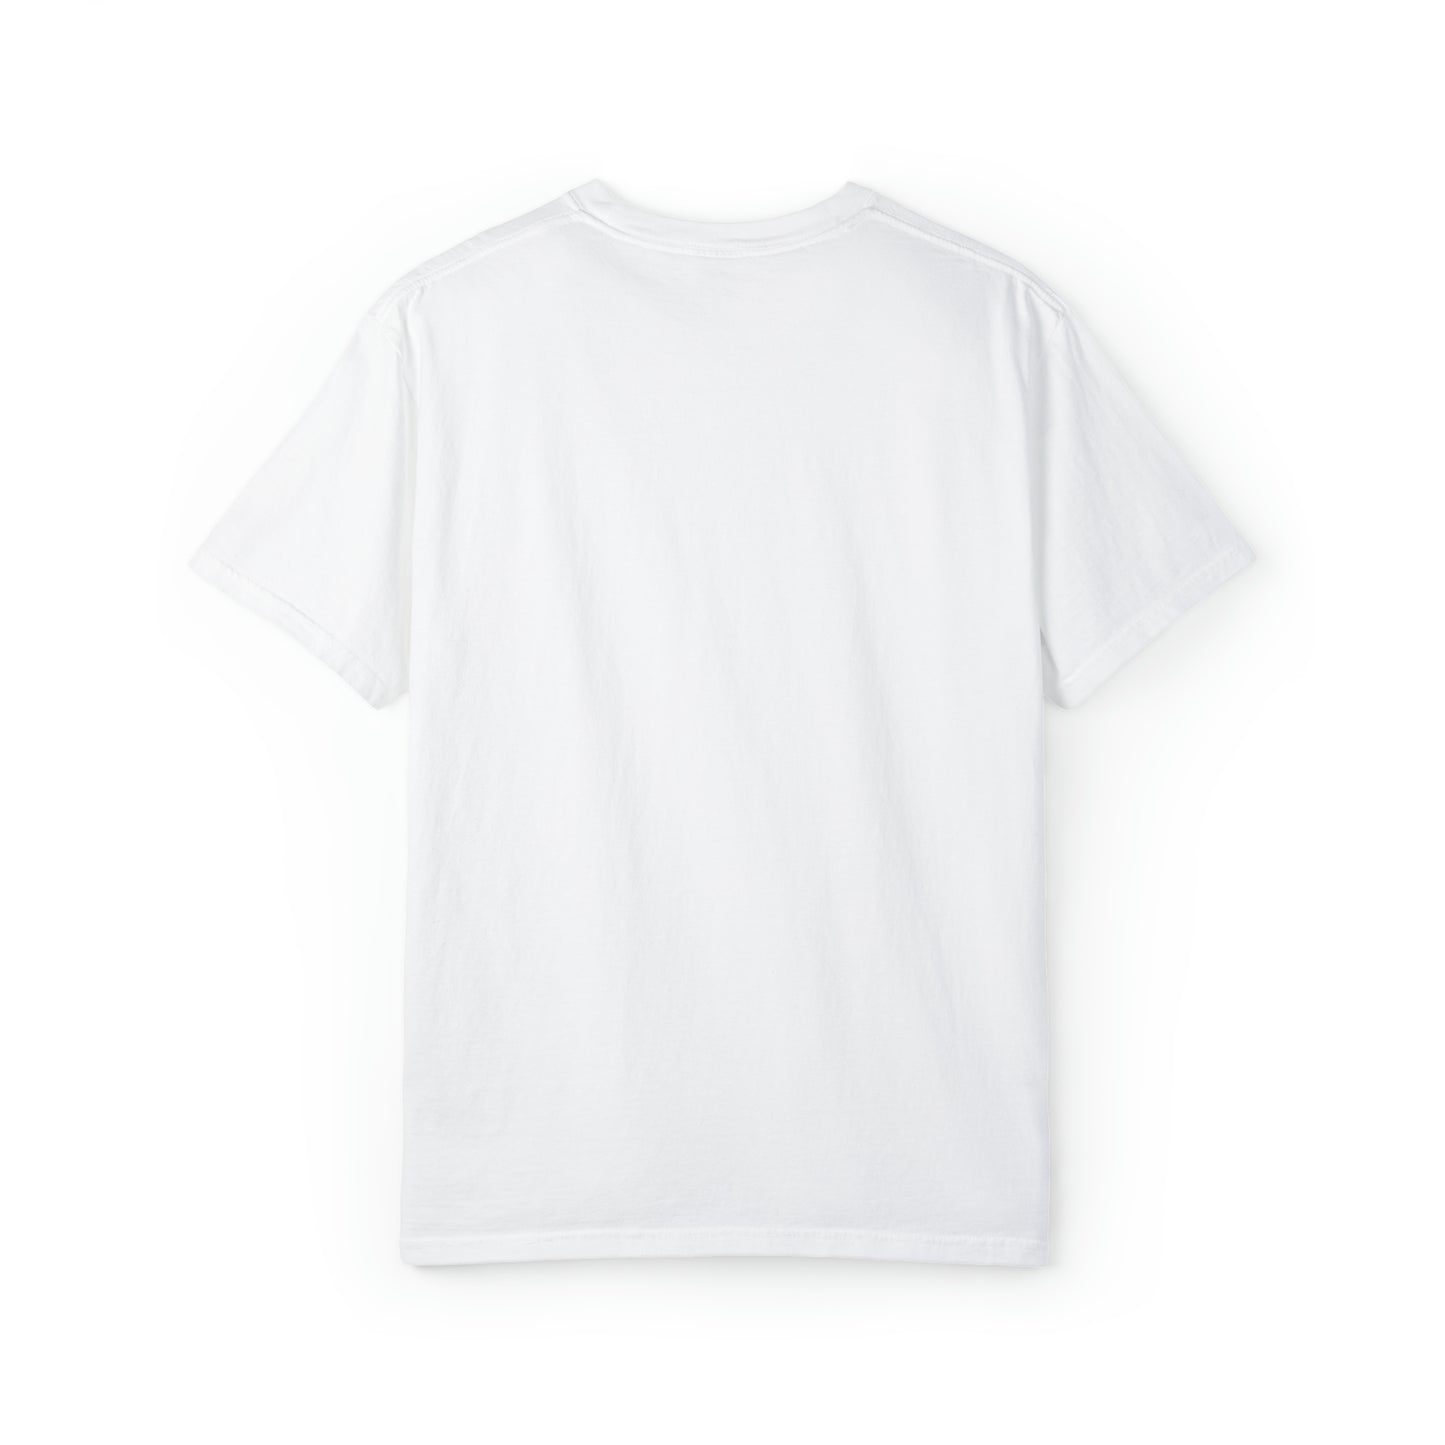 Comet Soccer - Unisex Garment-Dyed T-shirt